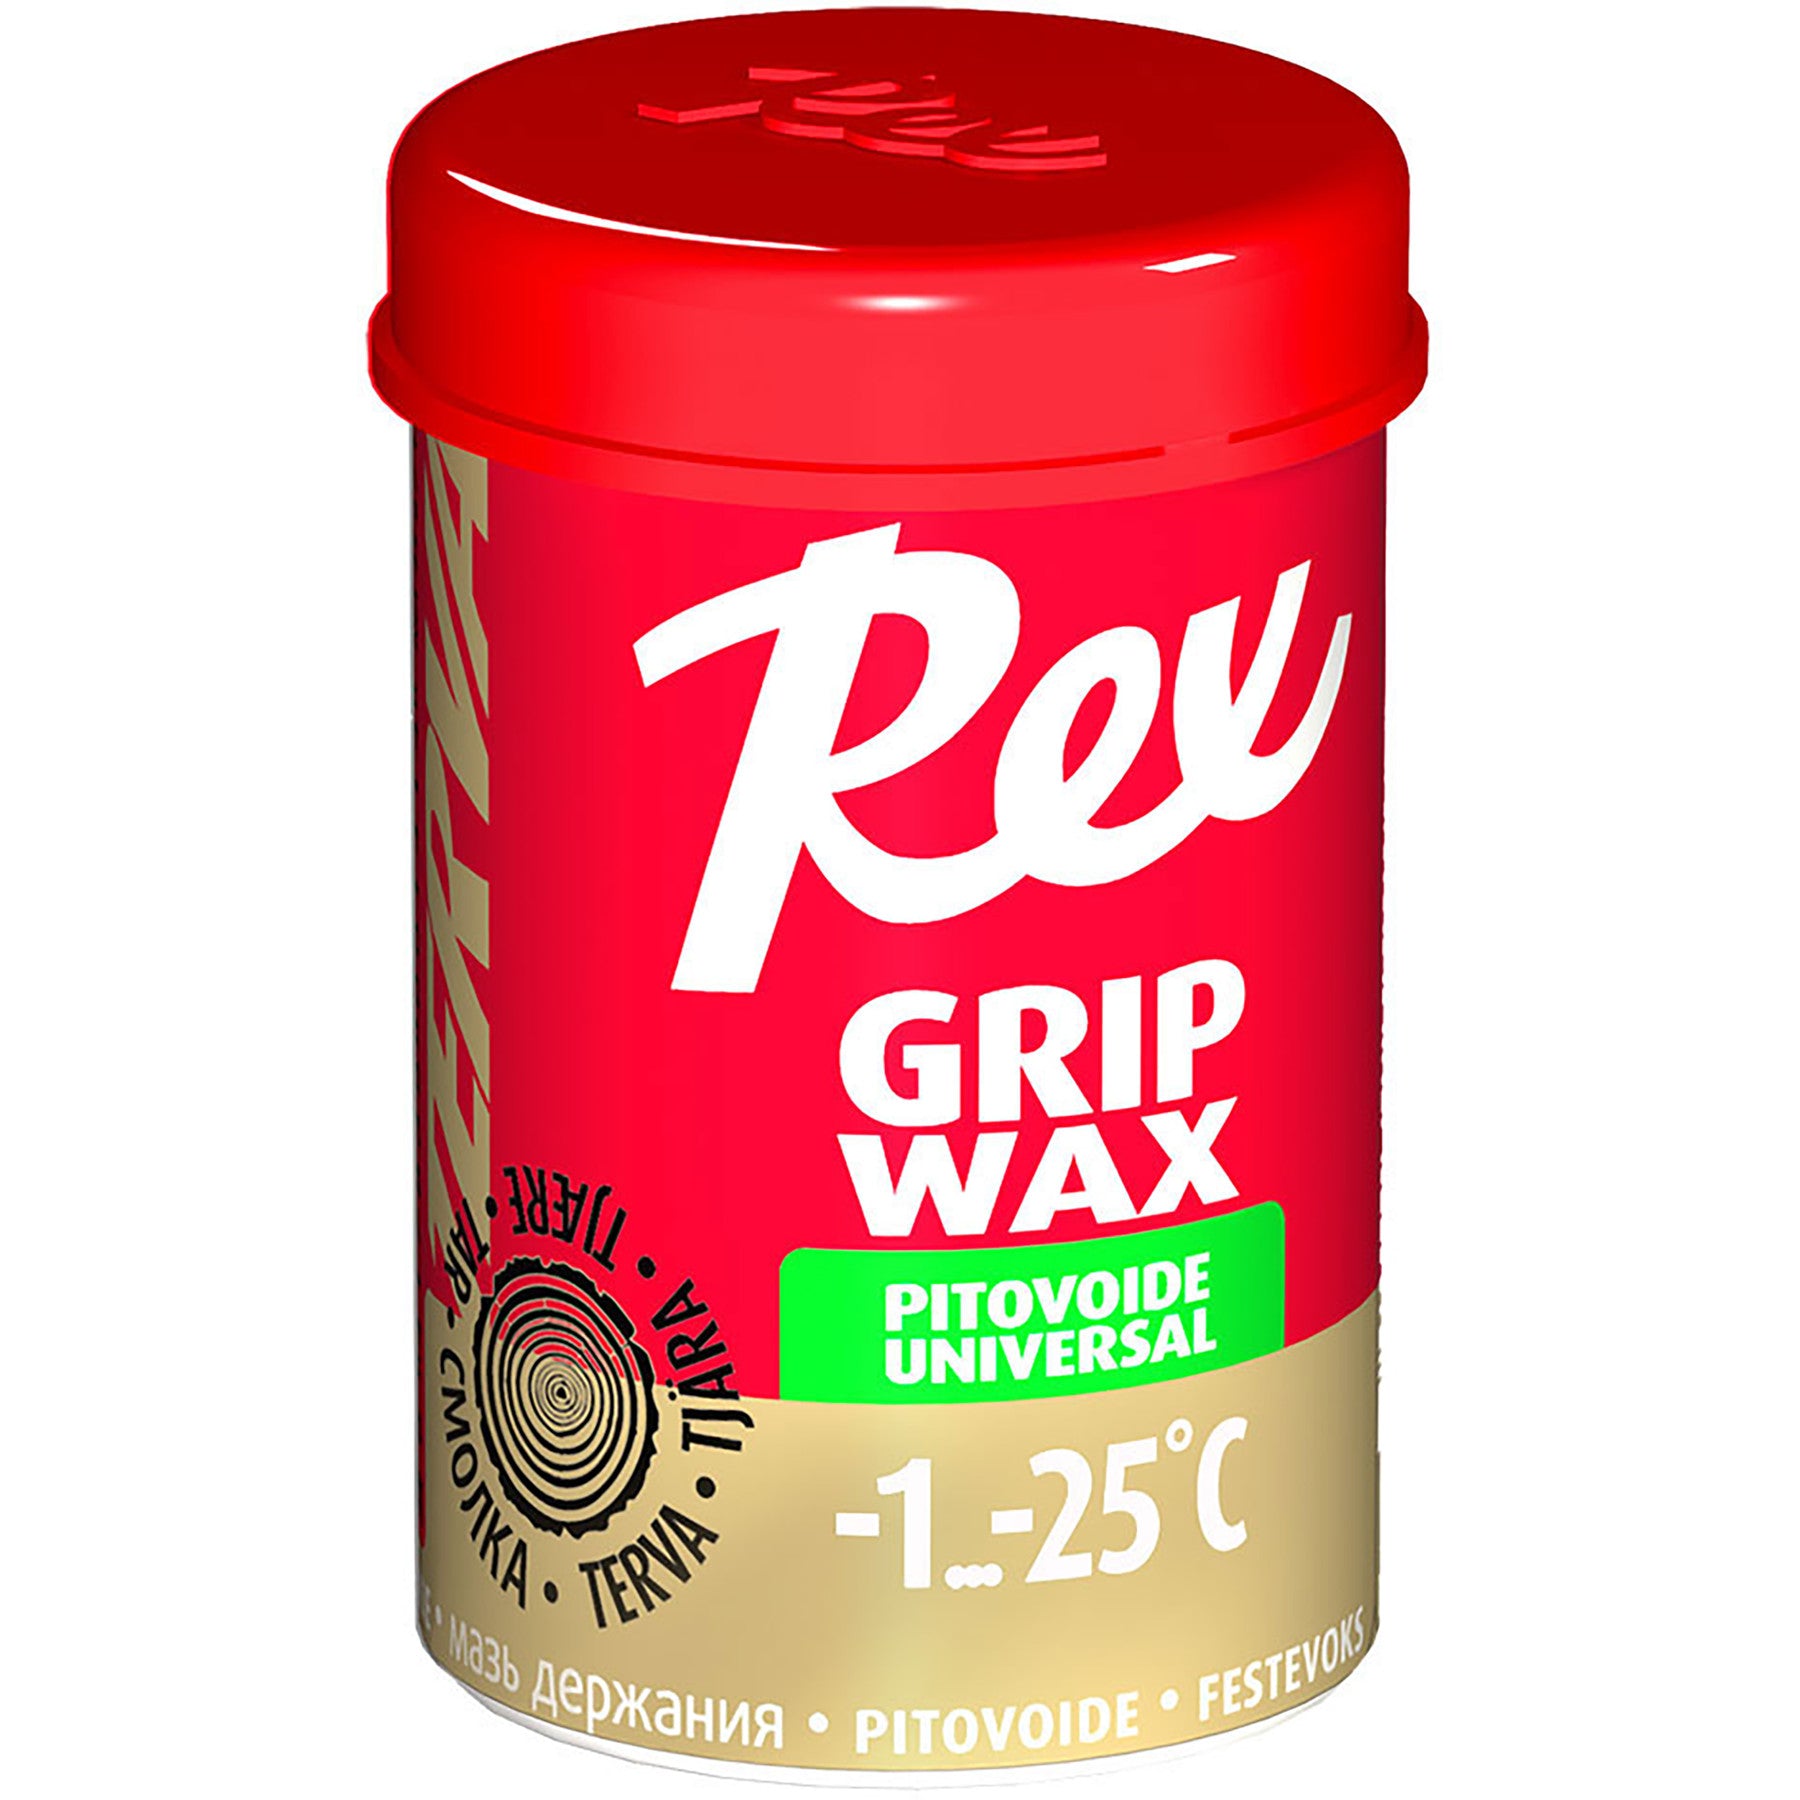 Buy universal-tar Rex Grip Wax 45g